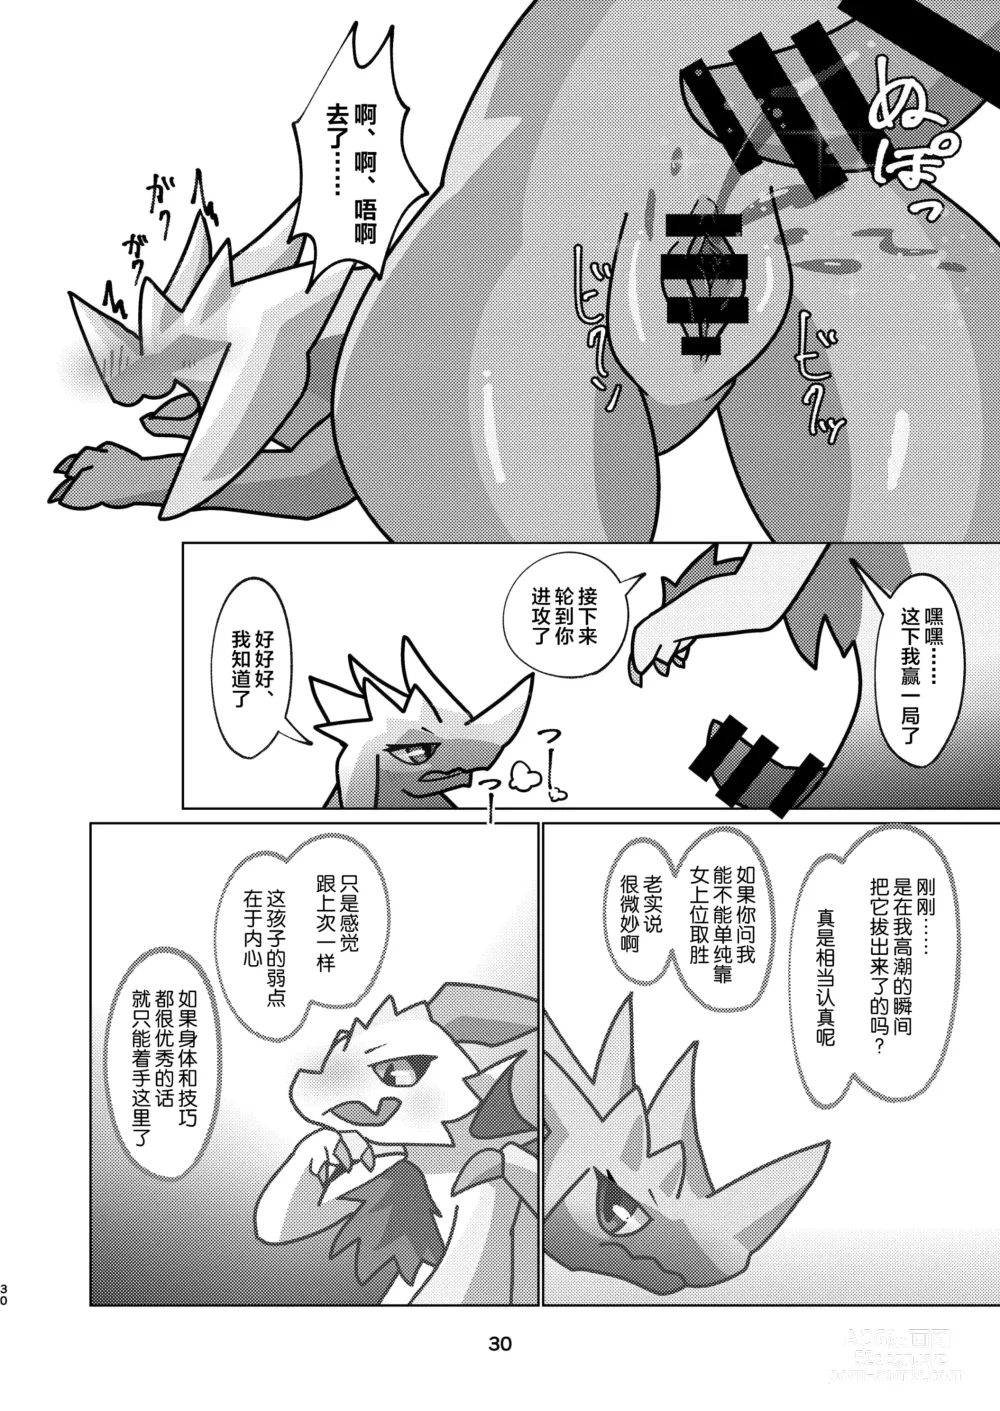 Page 30 of doujinshi 爱色冰龙的怪异克服